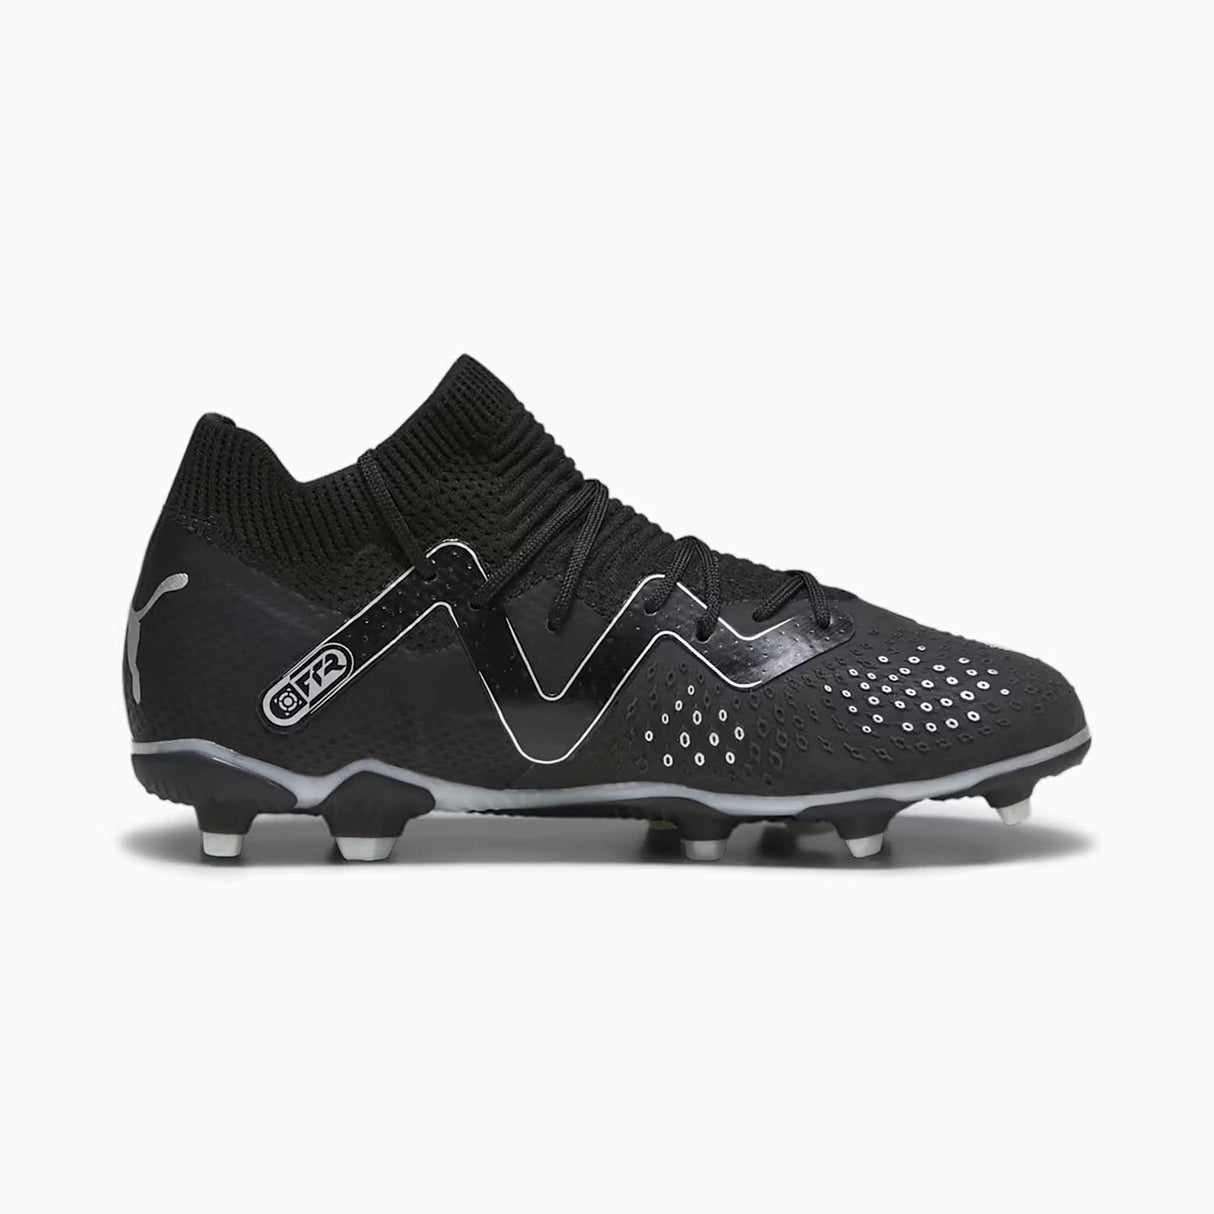 Puma Future Pro FG/AG chaussures de soccer à crampons enfant lateral - puma black / puma silver